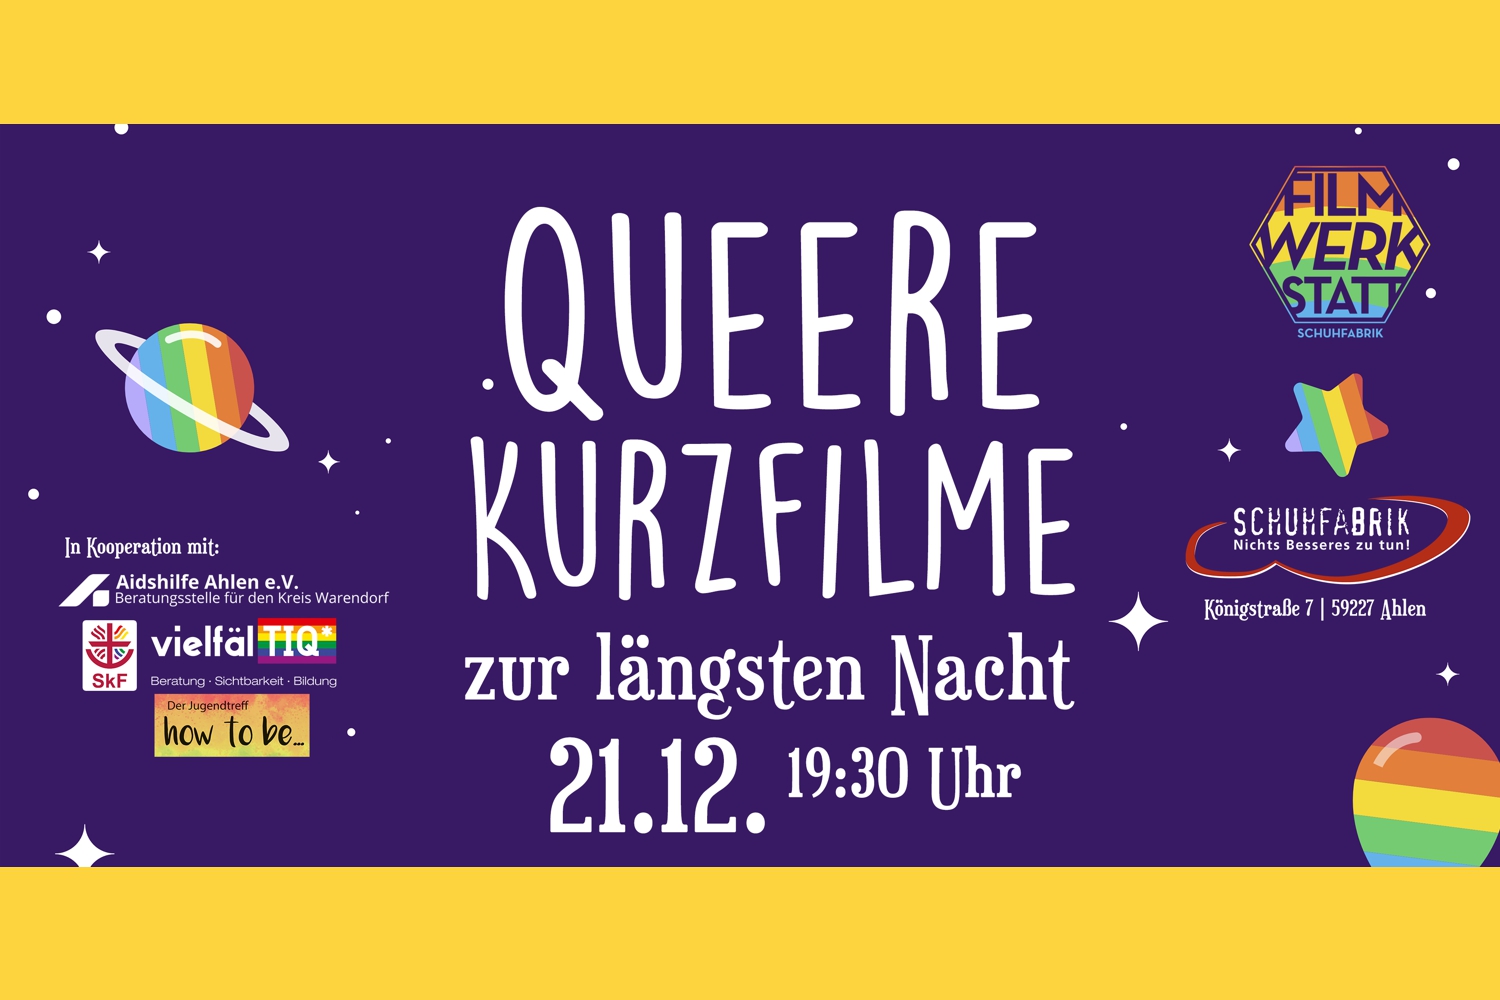 Bild zeigt: Plakat zur Veranstaltung queere Kurzfilme mit verschiedenen Logos